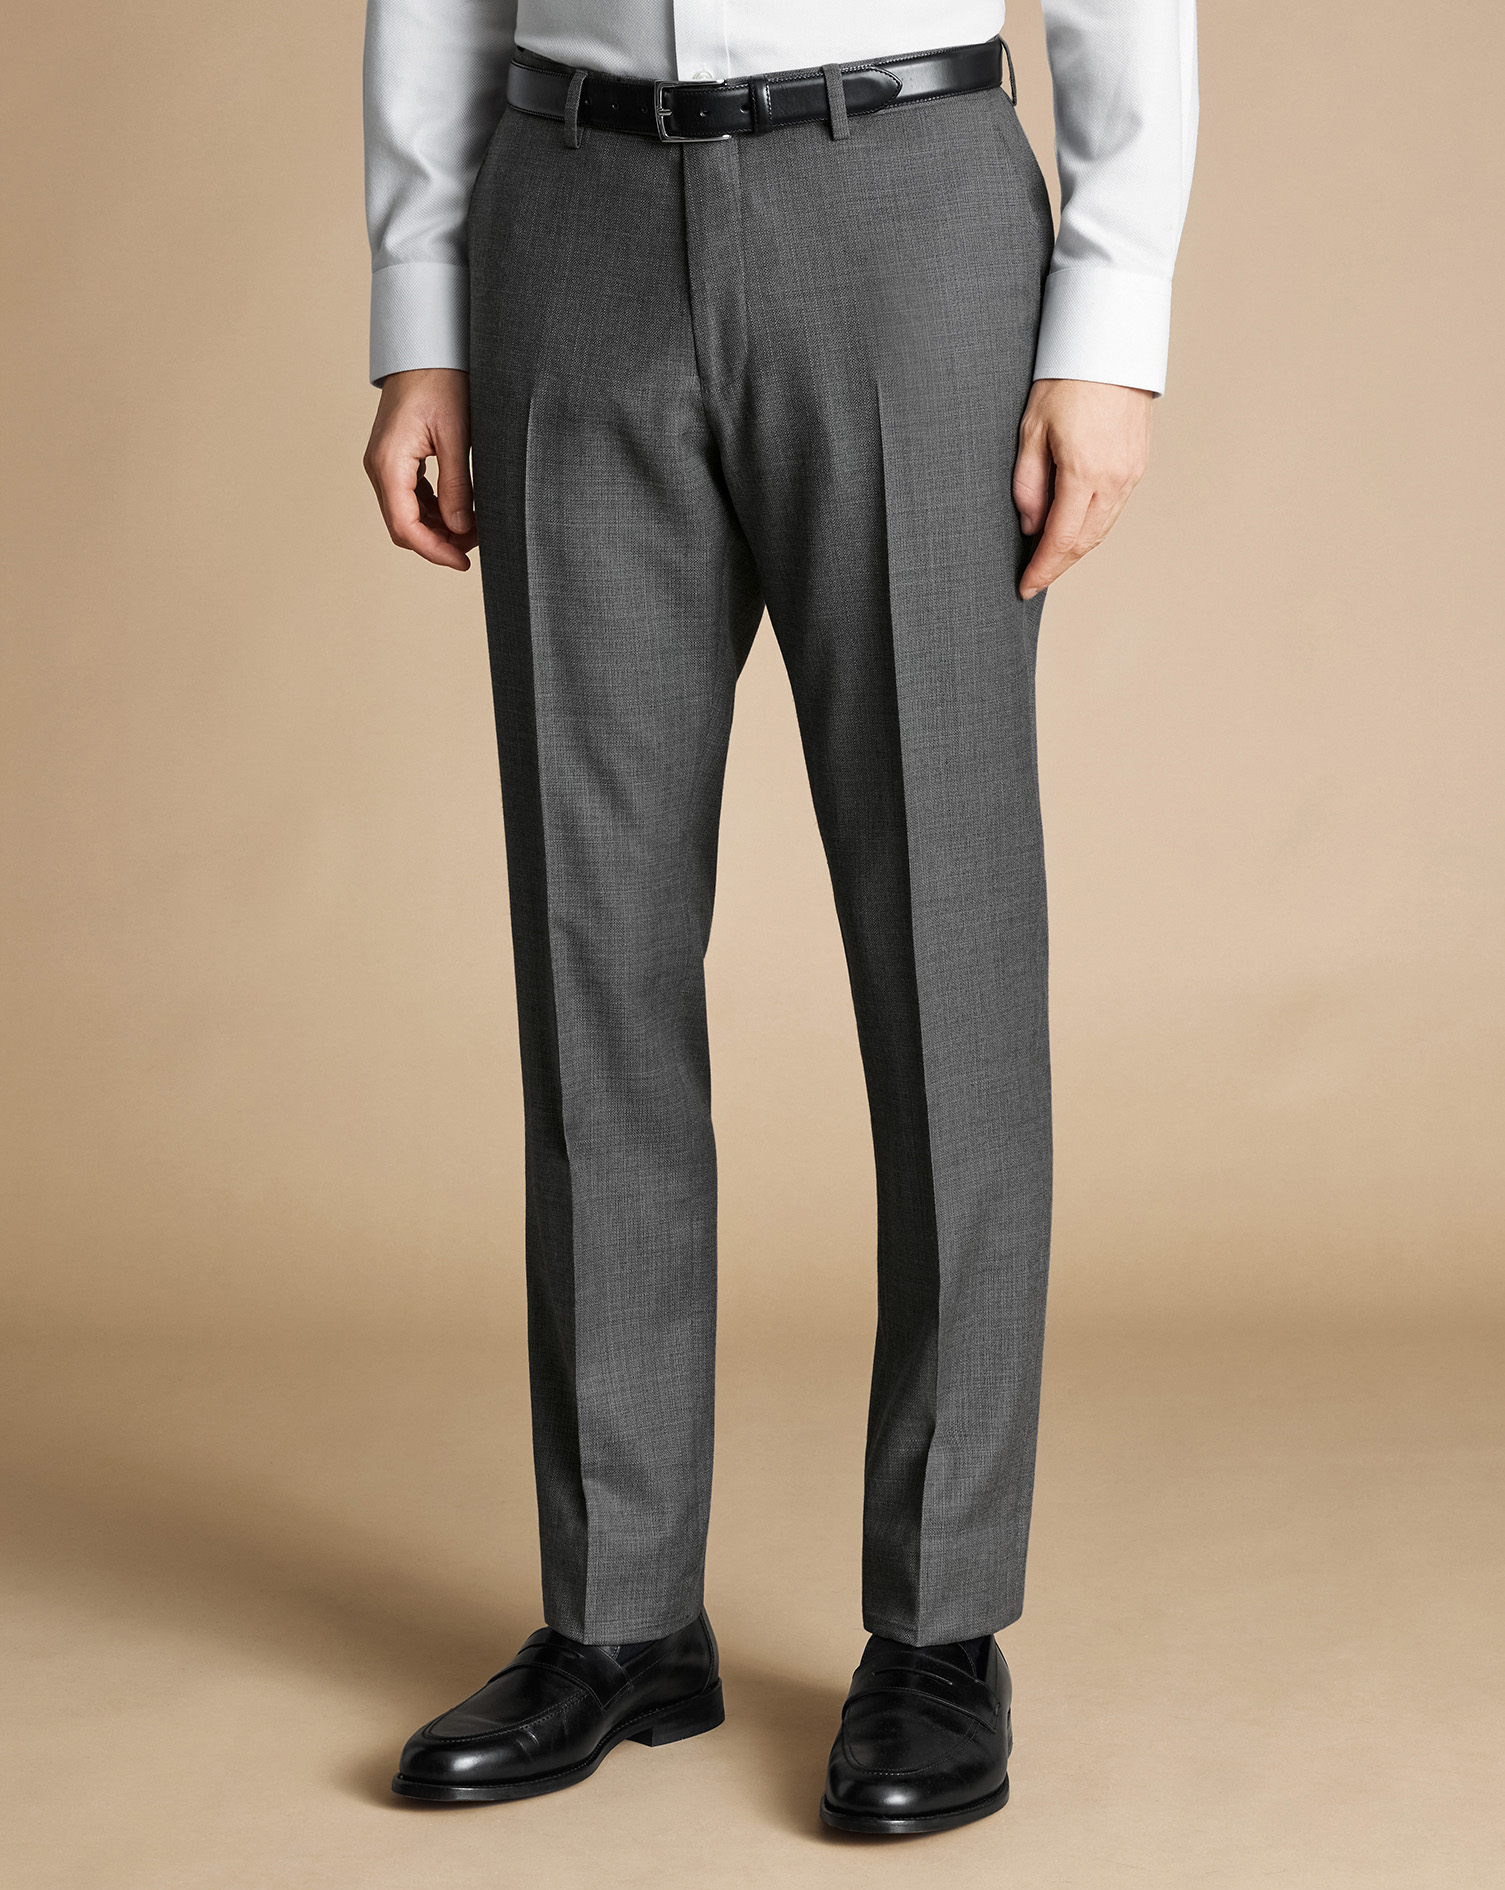 Men's Charles Tyrwhitt Italian Luxury Suit Trousers - Grey Size 38/32
